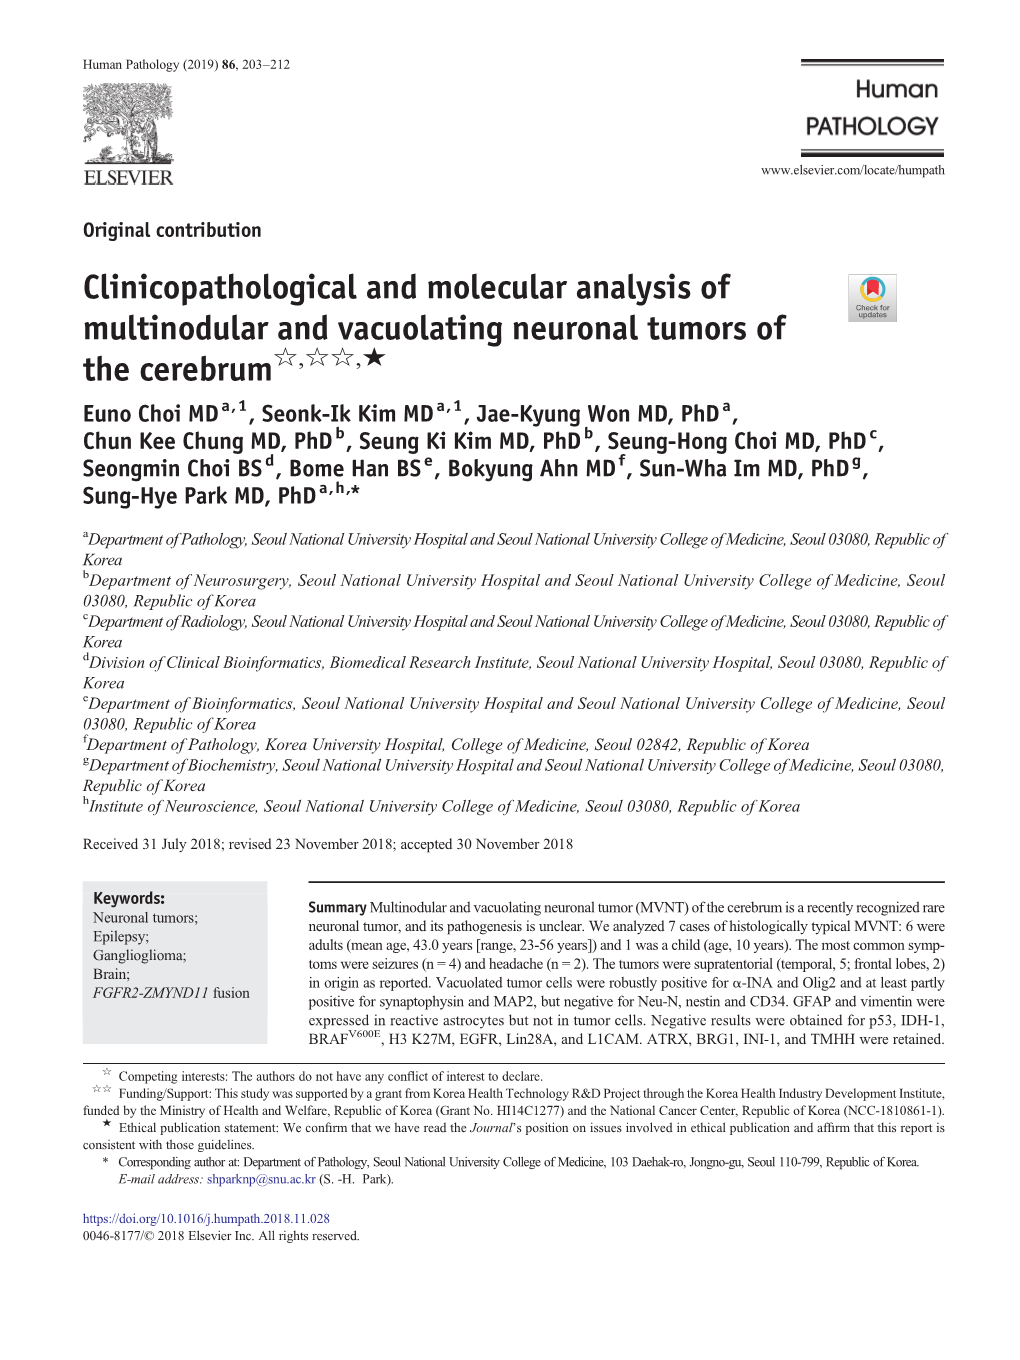 Clinicopathological and Molecular Analysis of Multinodular And